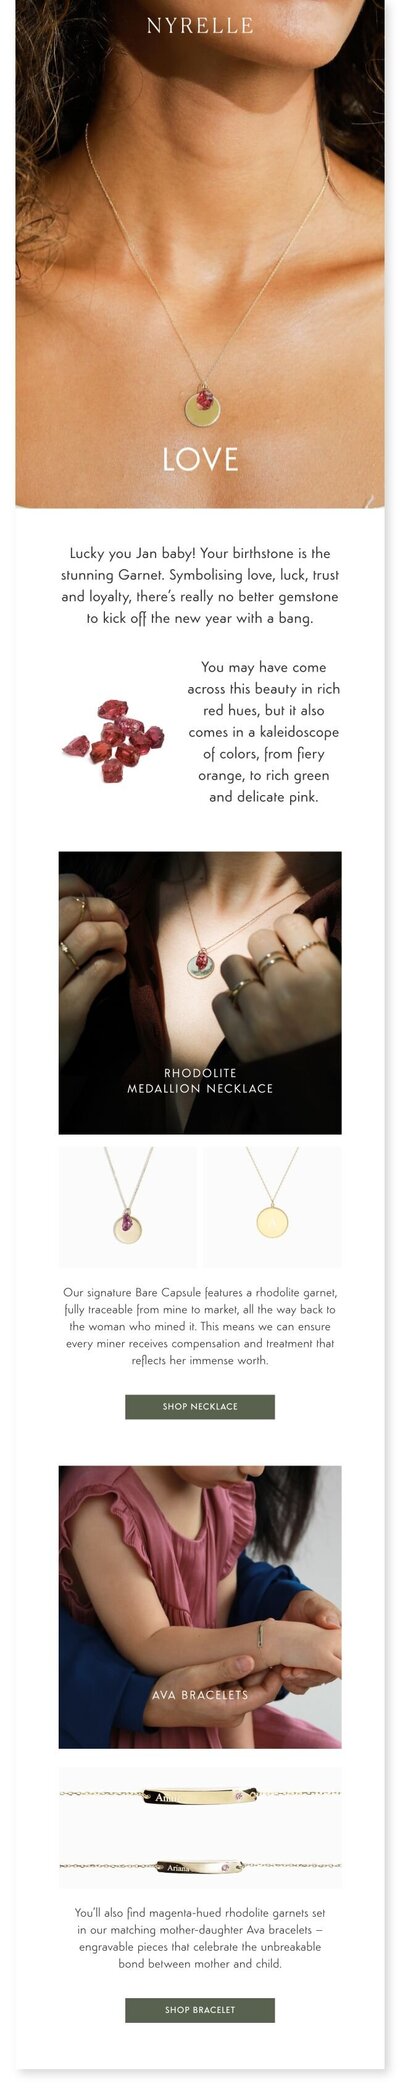 Hong Kong Digital Graphic Designer Kyra Janelle – eDM Newsletter Design for E-commerce Jewelry Brand NYRELLE Promoting January’s Birthstone Garnet Jewelry.